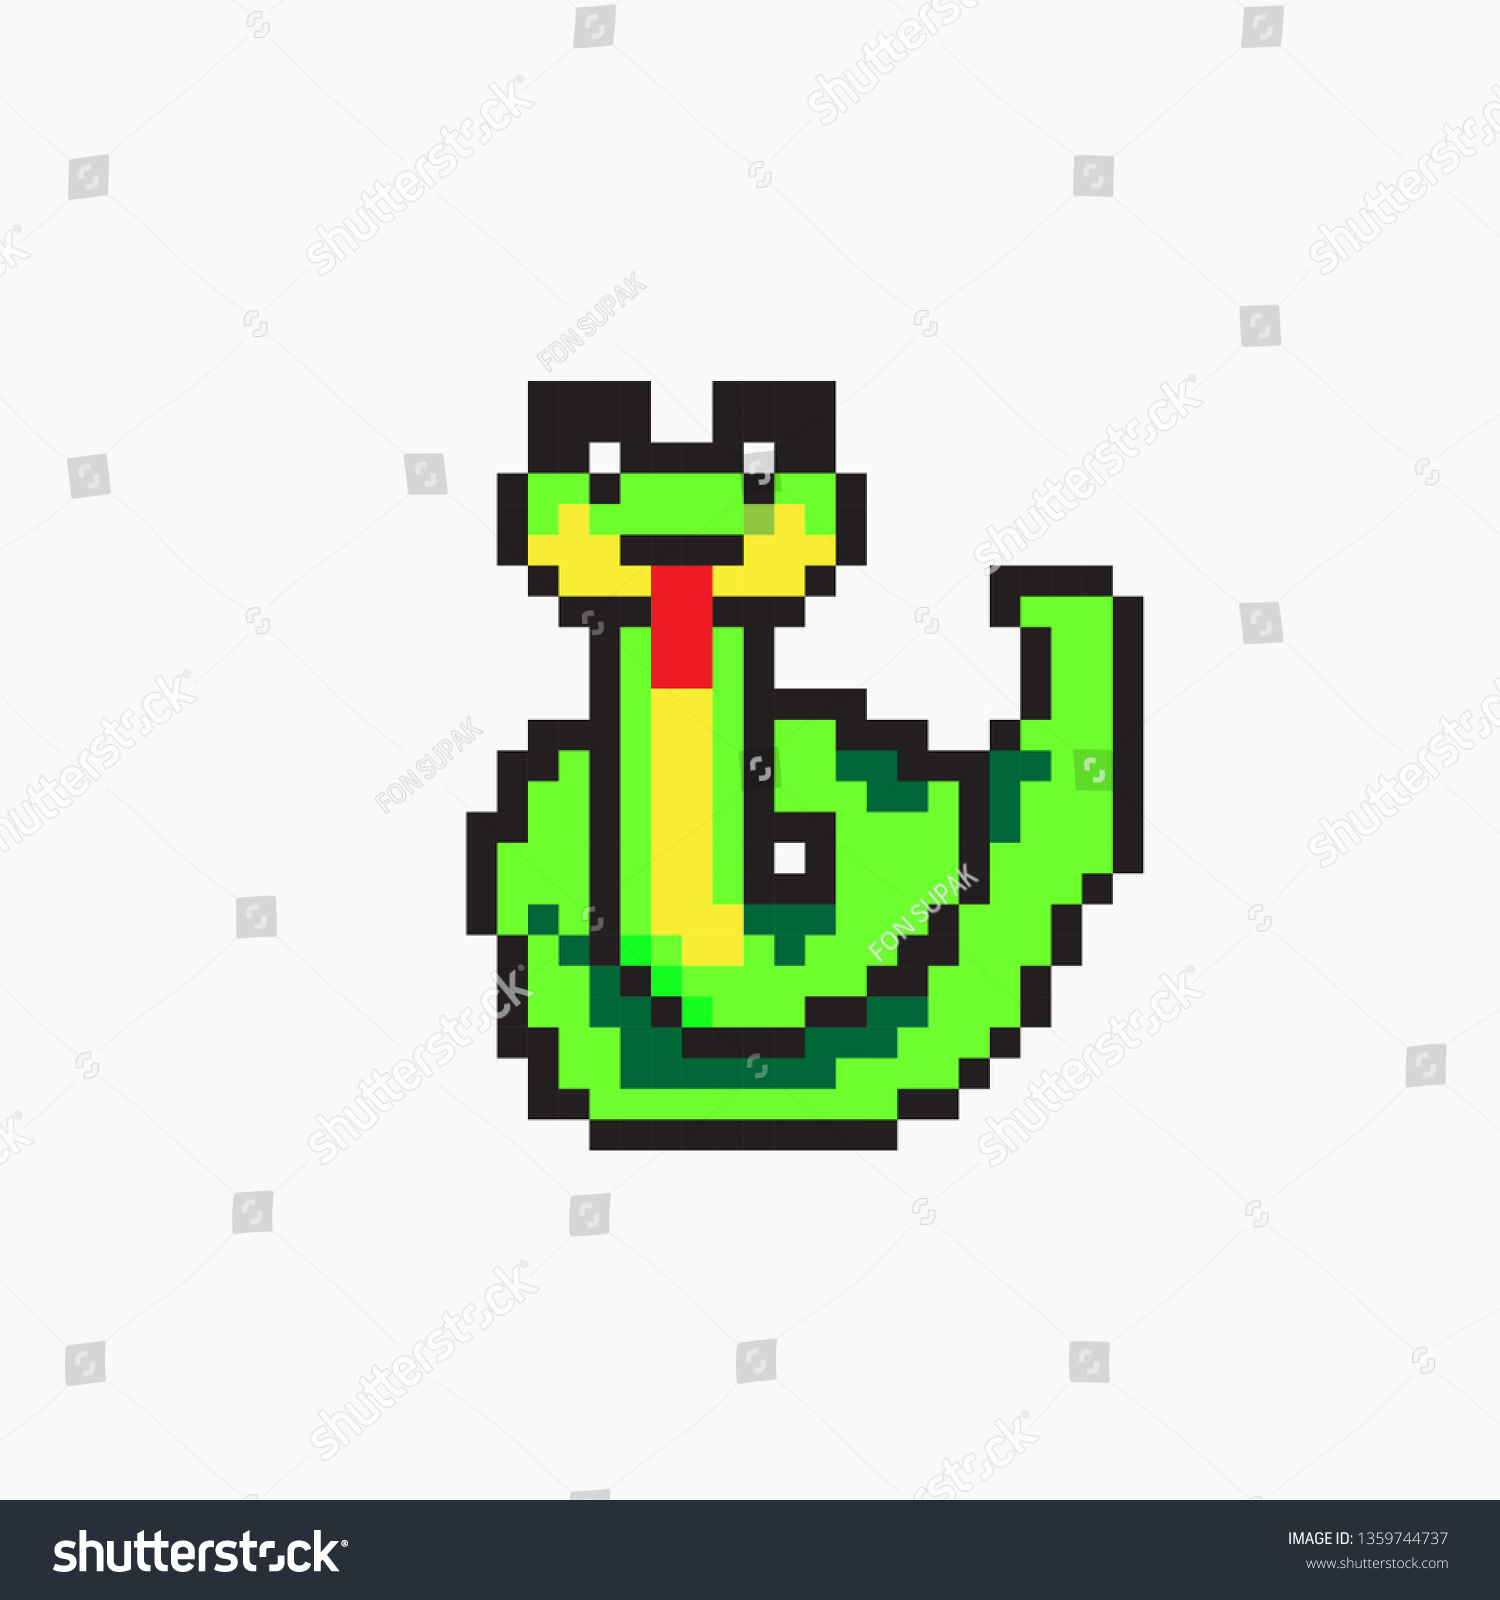 pixel art Snake - Royalty Free Stock Vector 1359744737 - Avopix.com